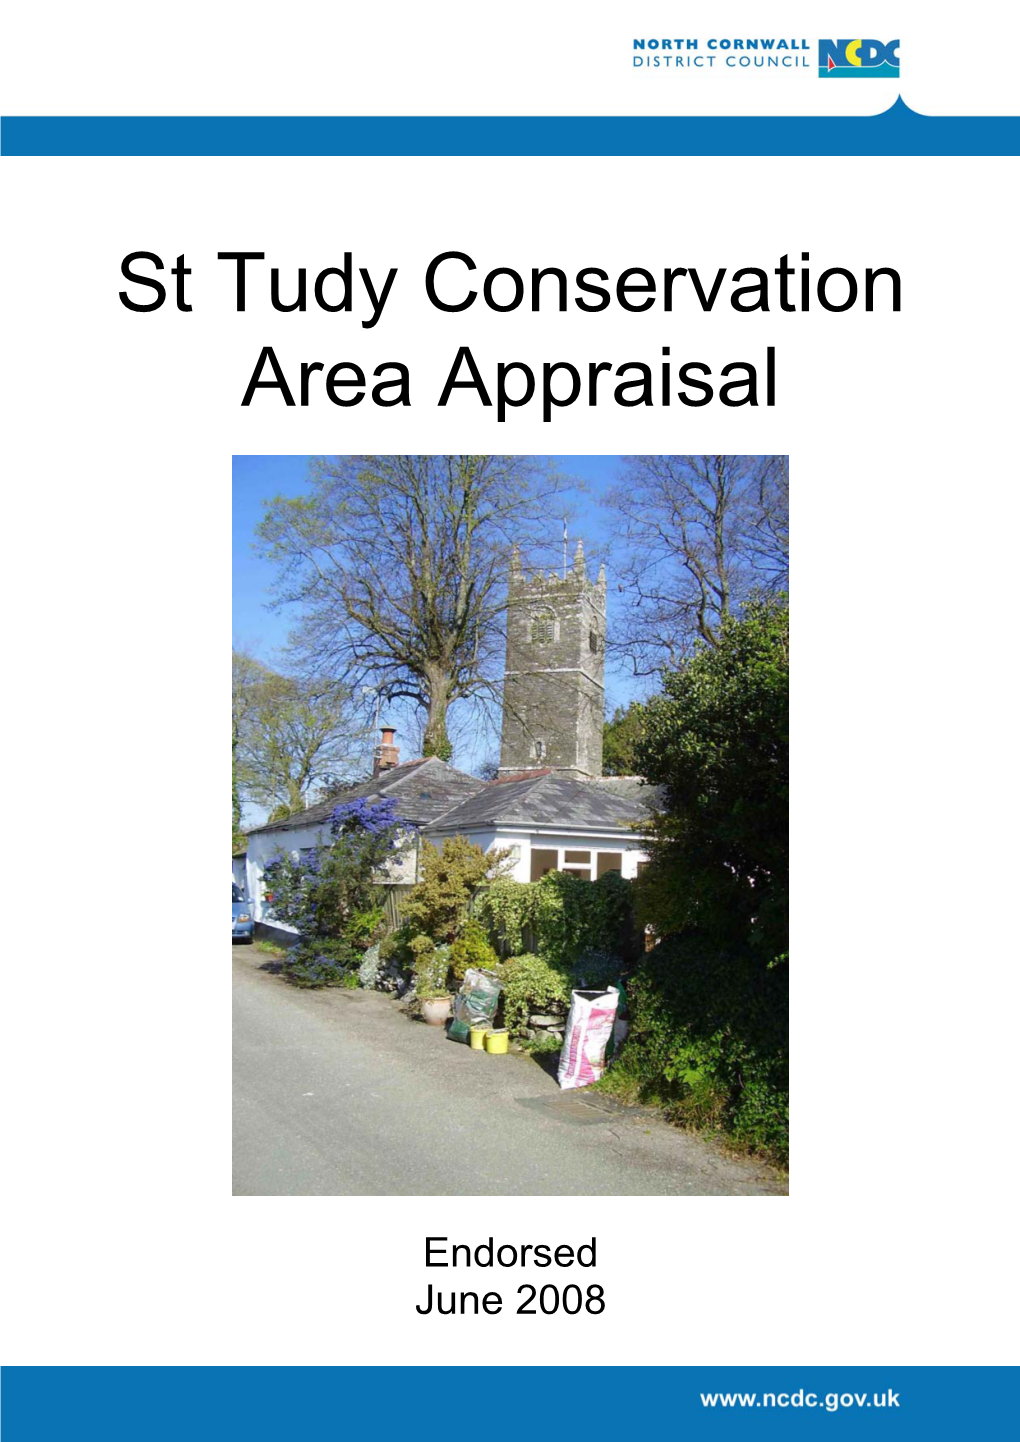 St Tudy Conservation Area Appraisal